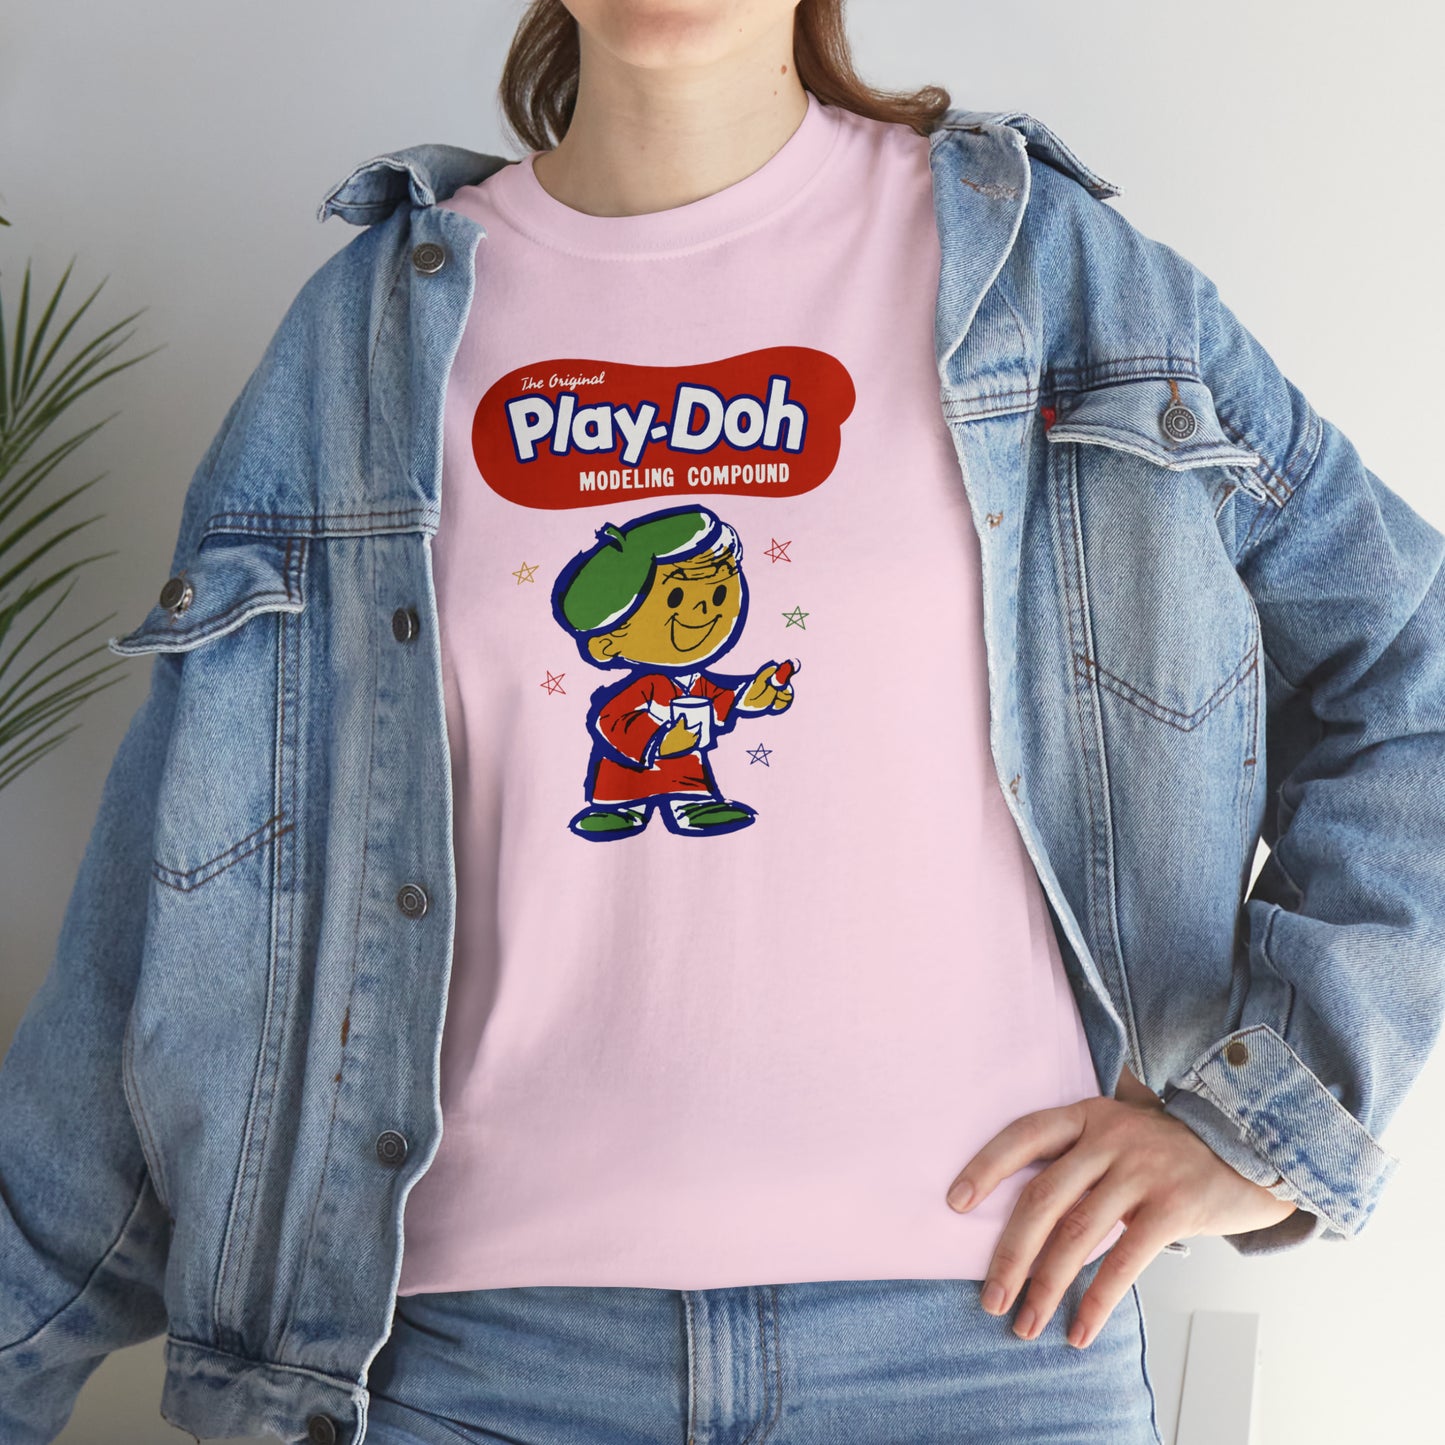 Play-Doh Pete T-Shirt